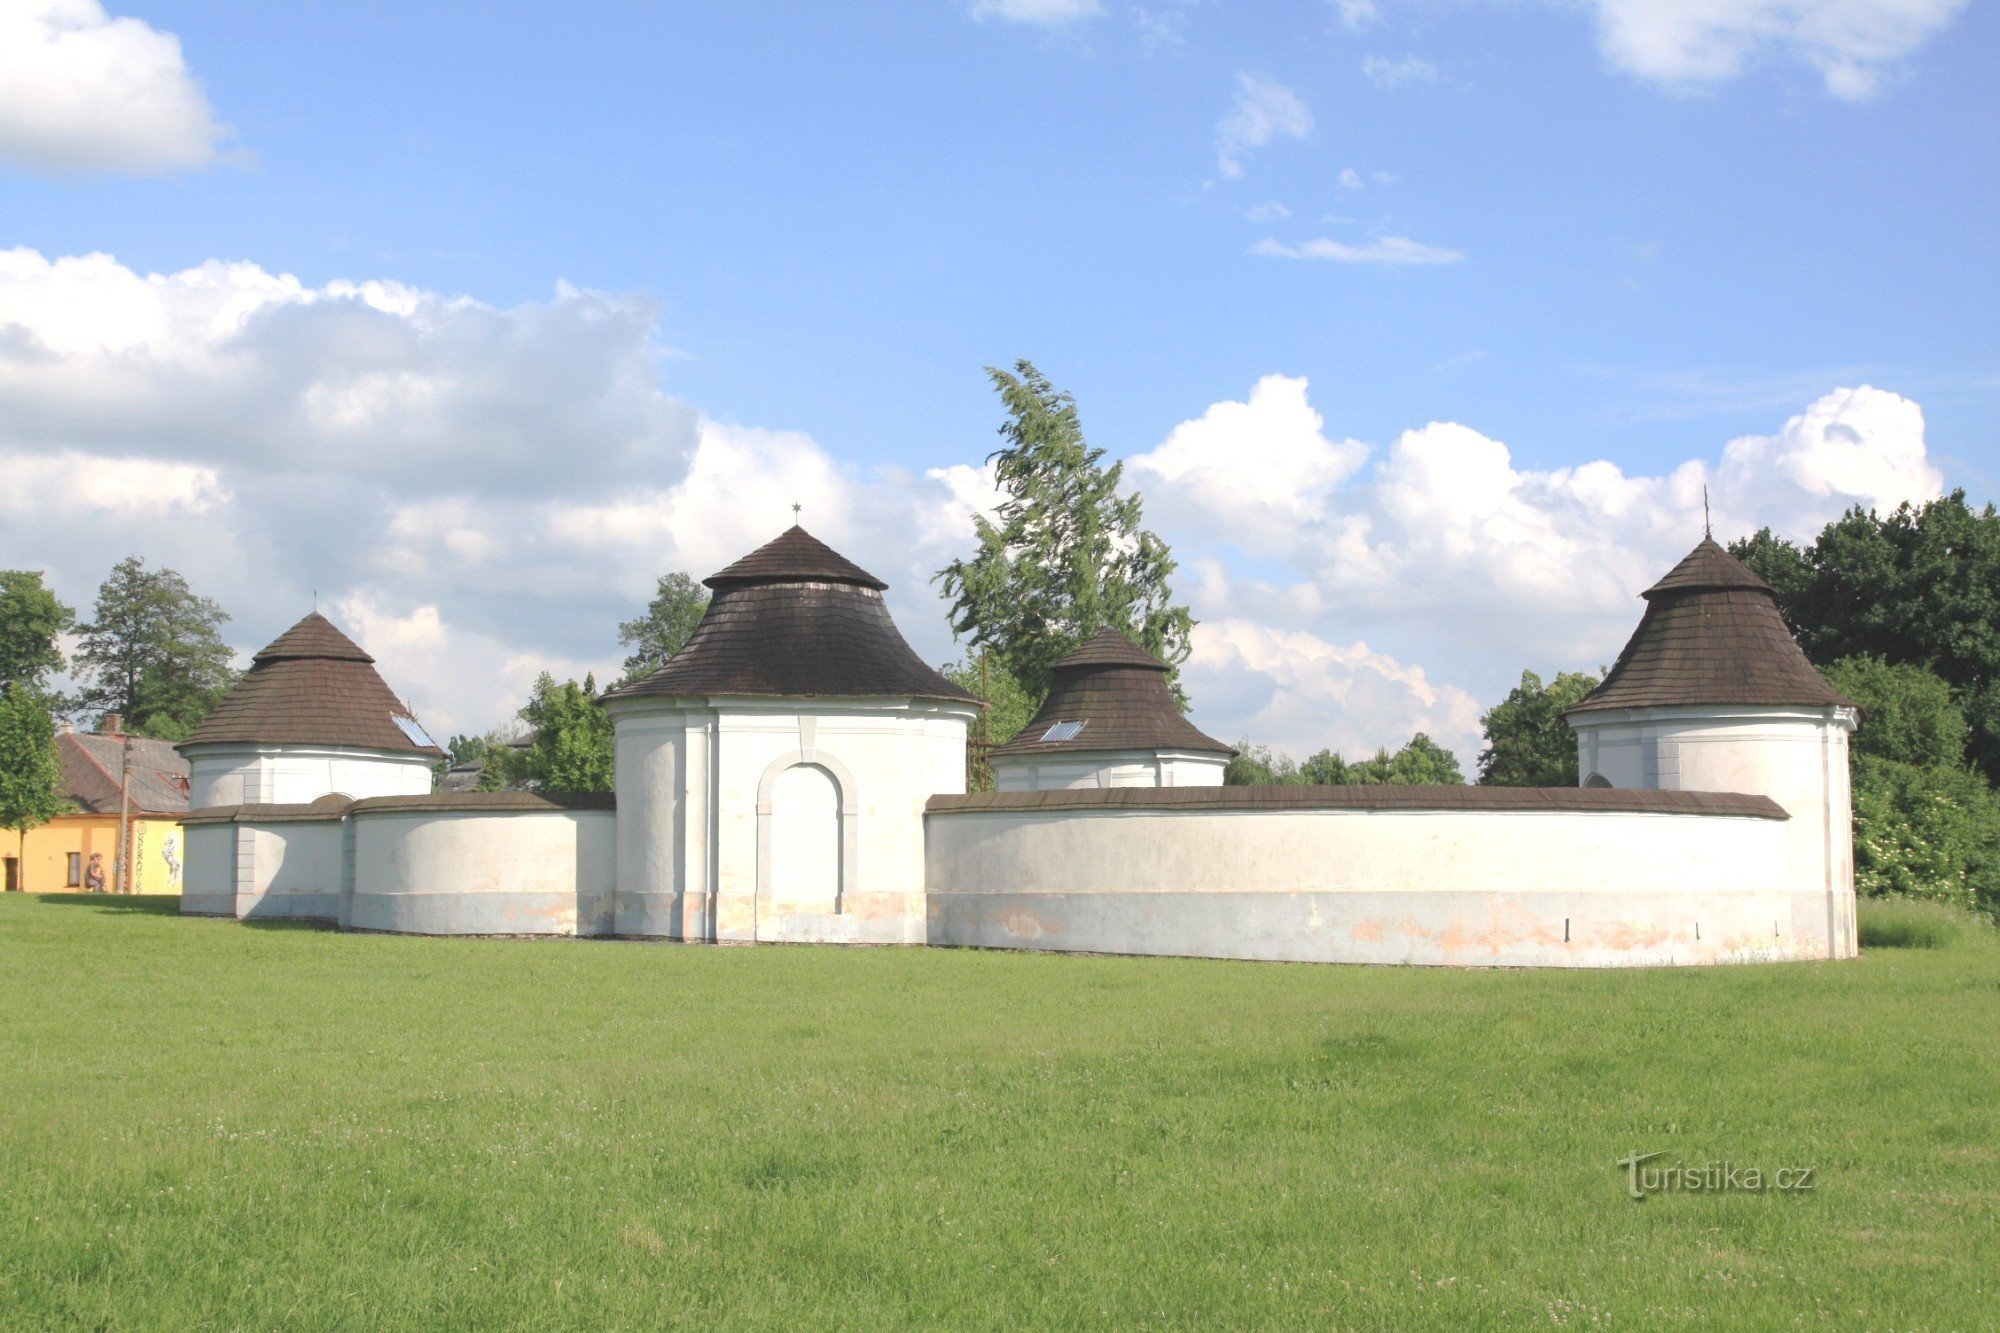 Žďár nad Sázavou - ex cimitero della peste